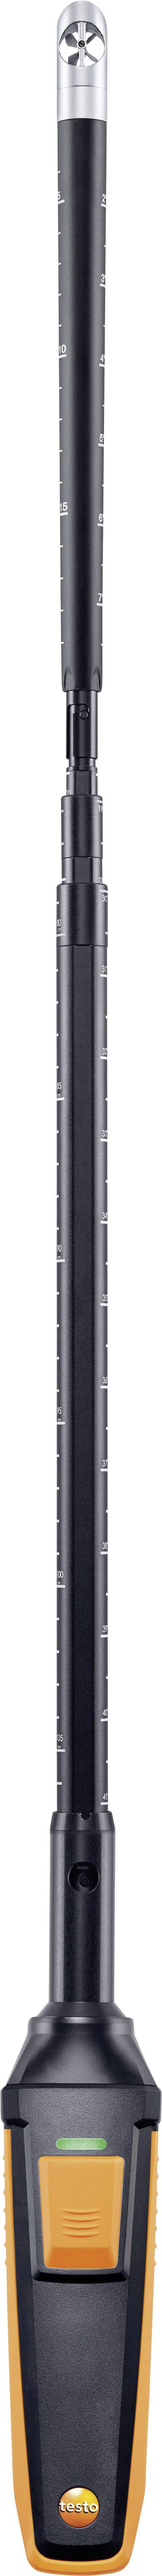 TESTO Sonde testo 0635 9571 Flügelrad-Sonde (Ø 16 mm) mit Bluetooth, inkl. Temperatursensor,